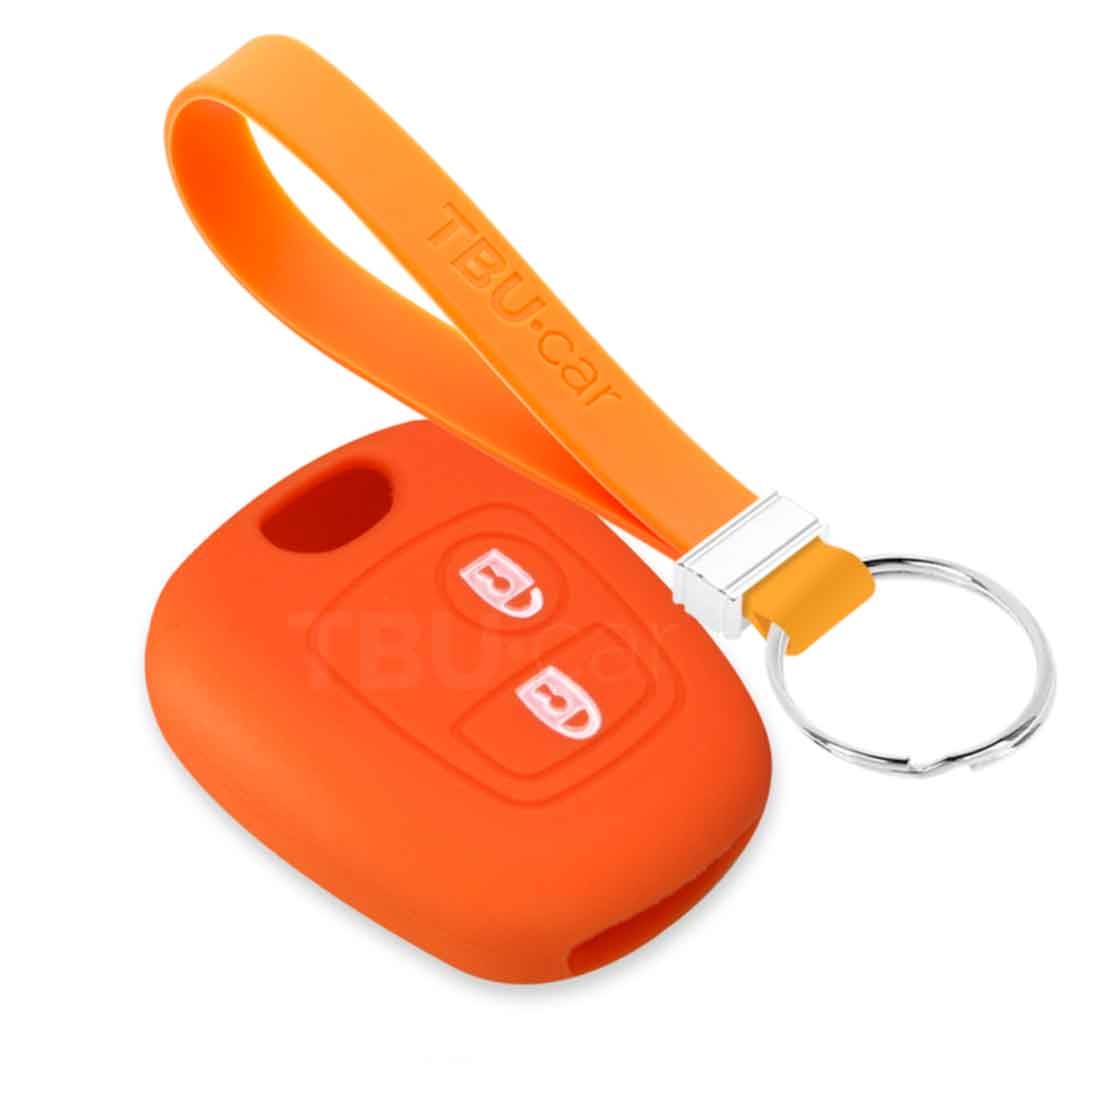 TBU car TBU car Autoschlüssel Hülle kompatibel mit Citroën 2 Tasten - Schutzhülle aus Silikon - Auto Schlüsselhülle Cover in Orange